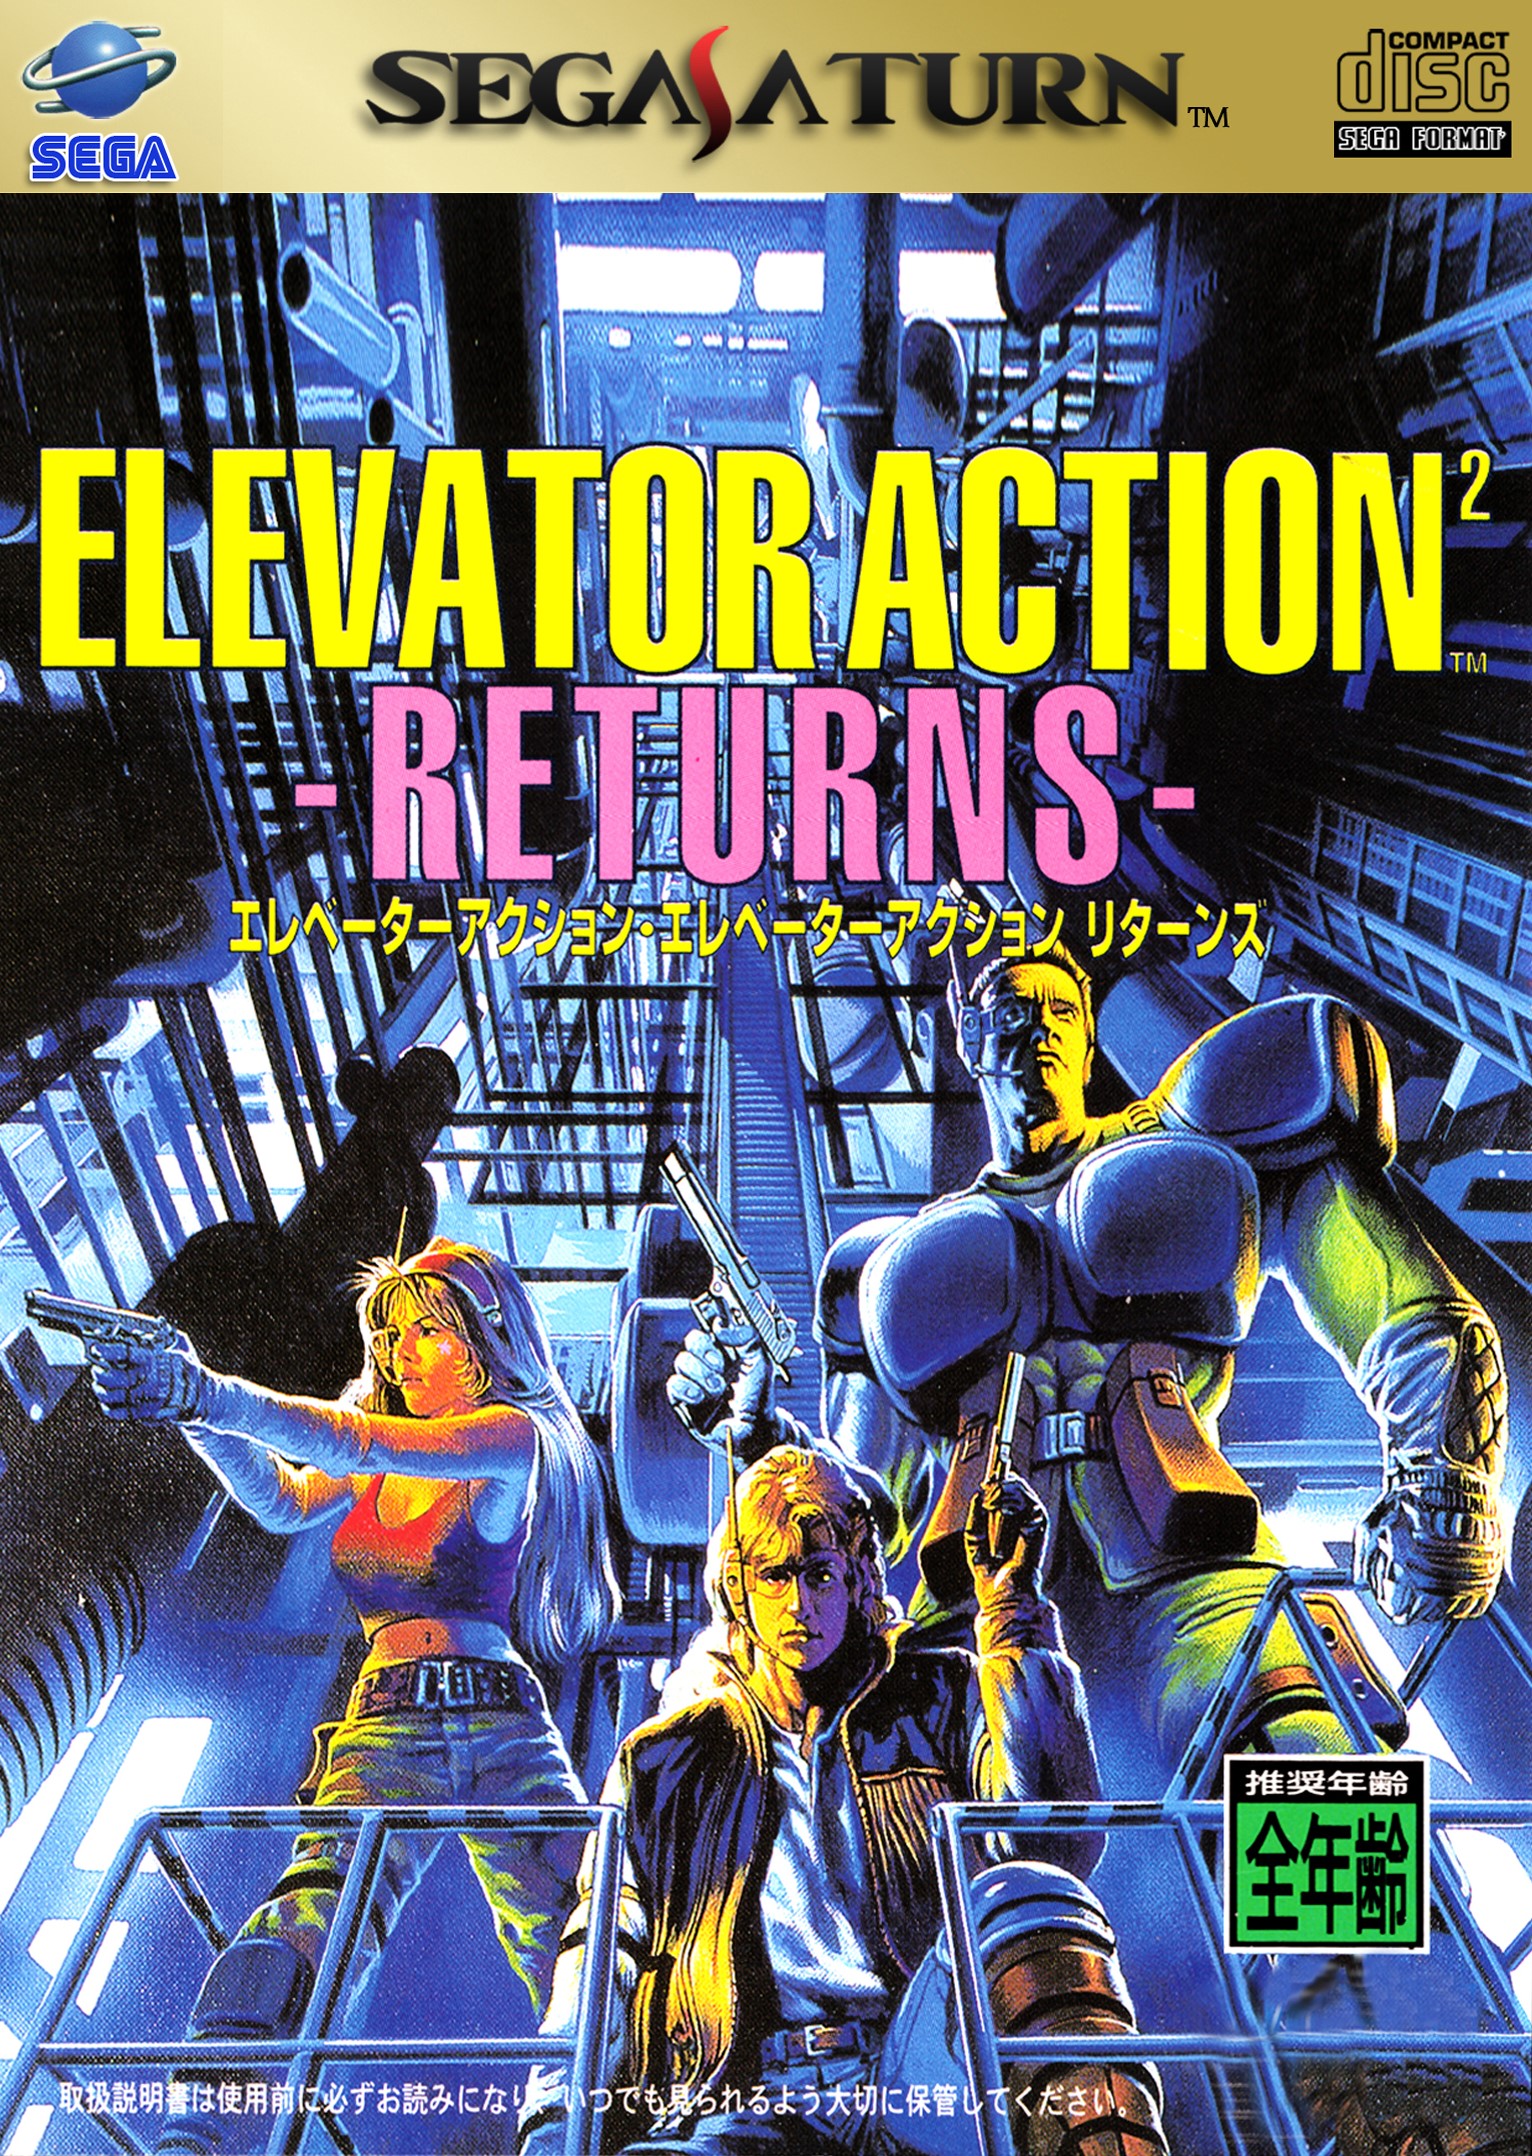 'Elevator Action 2: Returns'